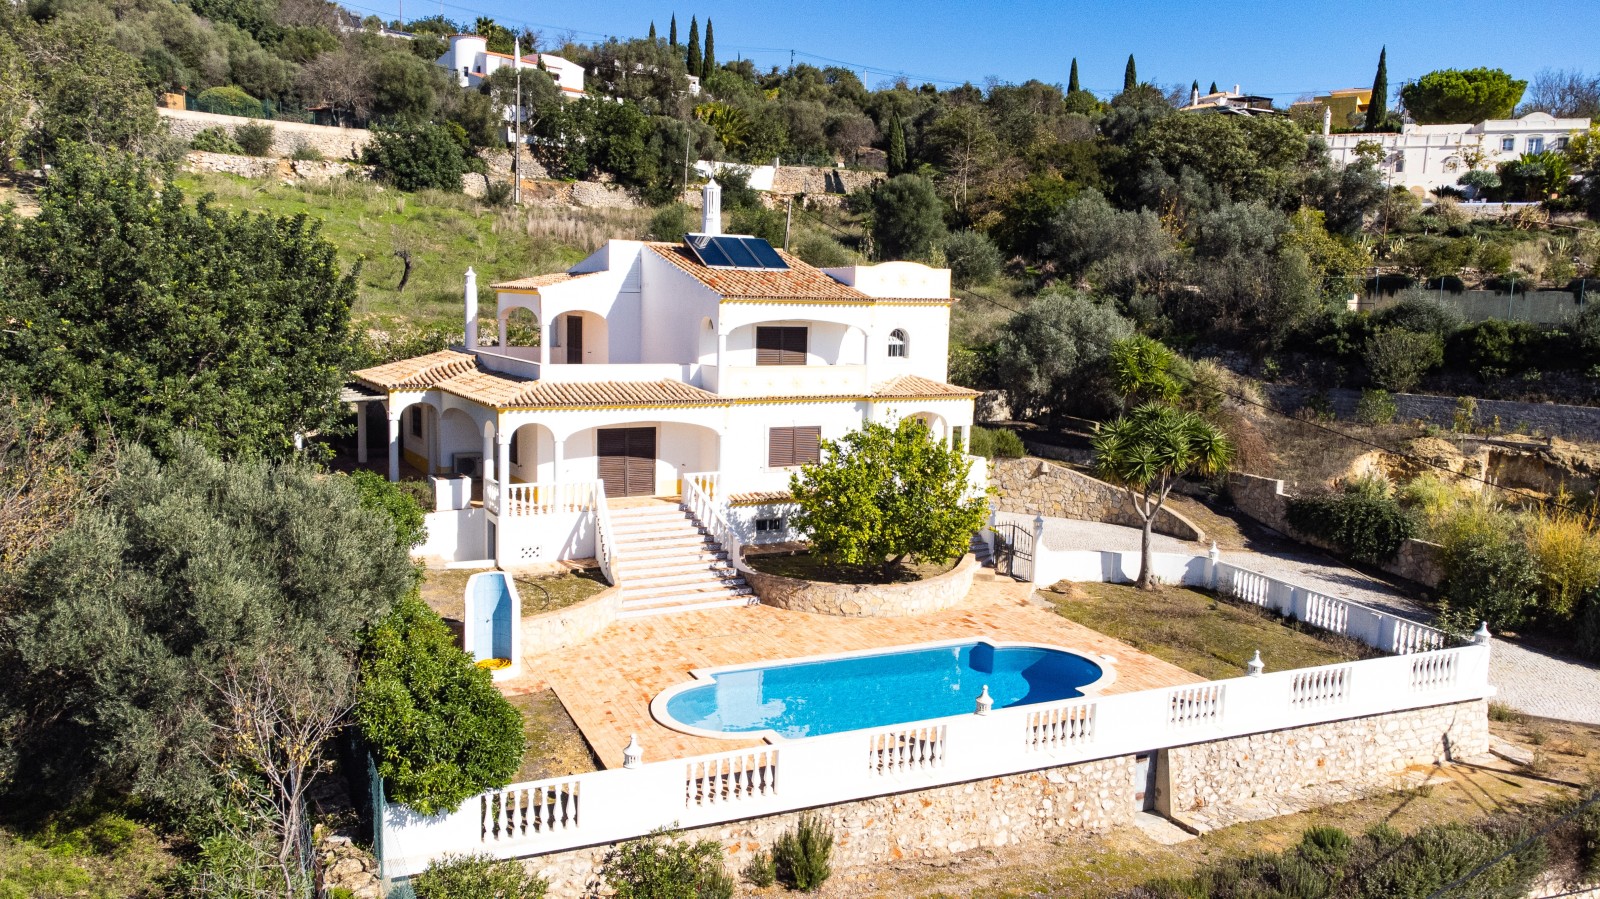 4-Bedroom Villa, and land, for sale in Boliqueime, Loulé, Algarve_245332